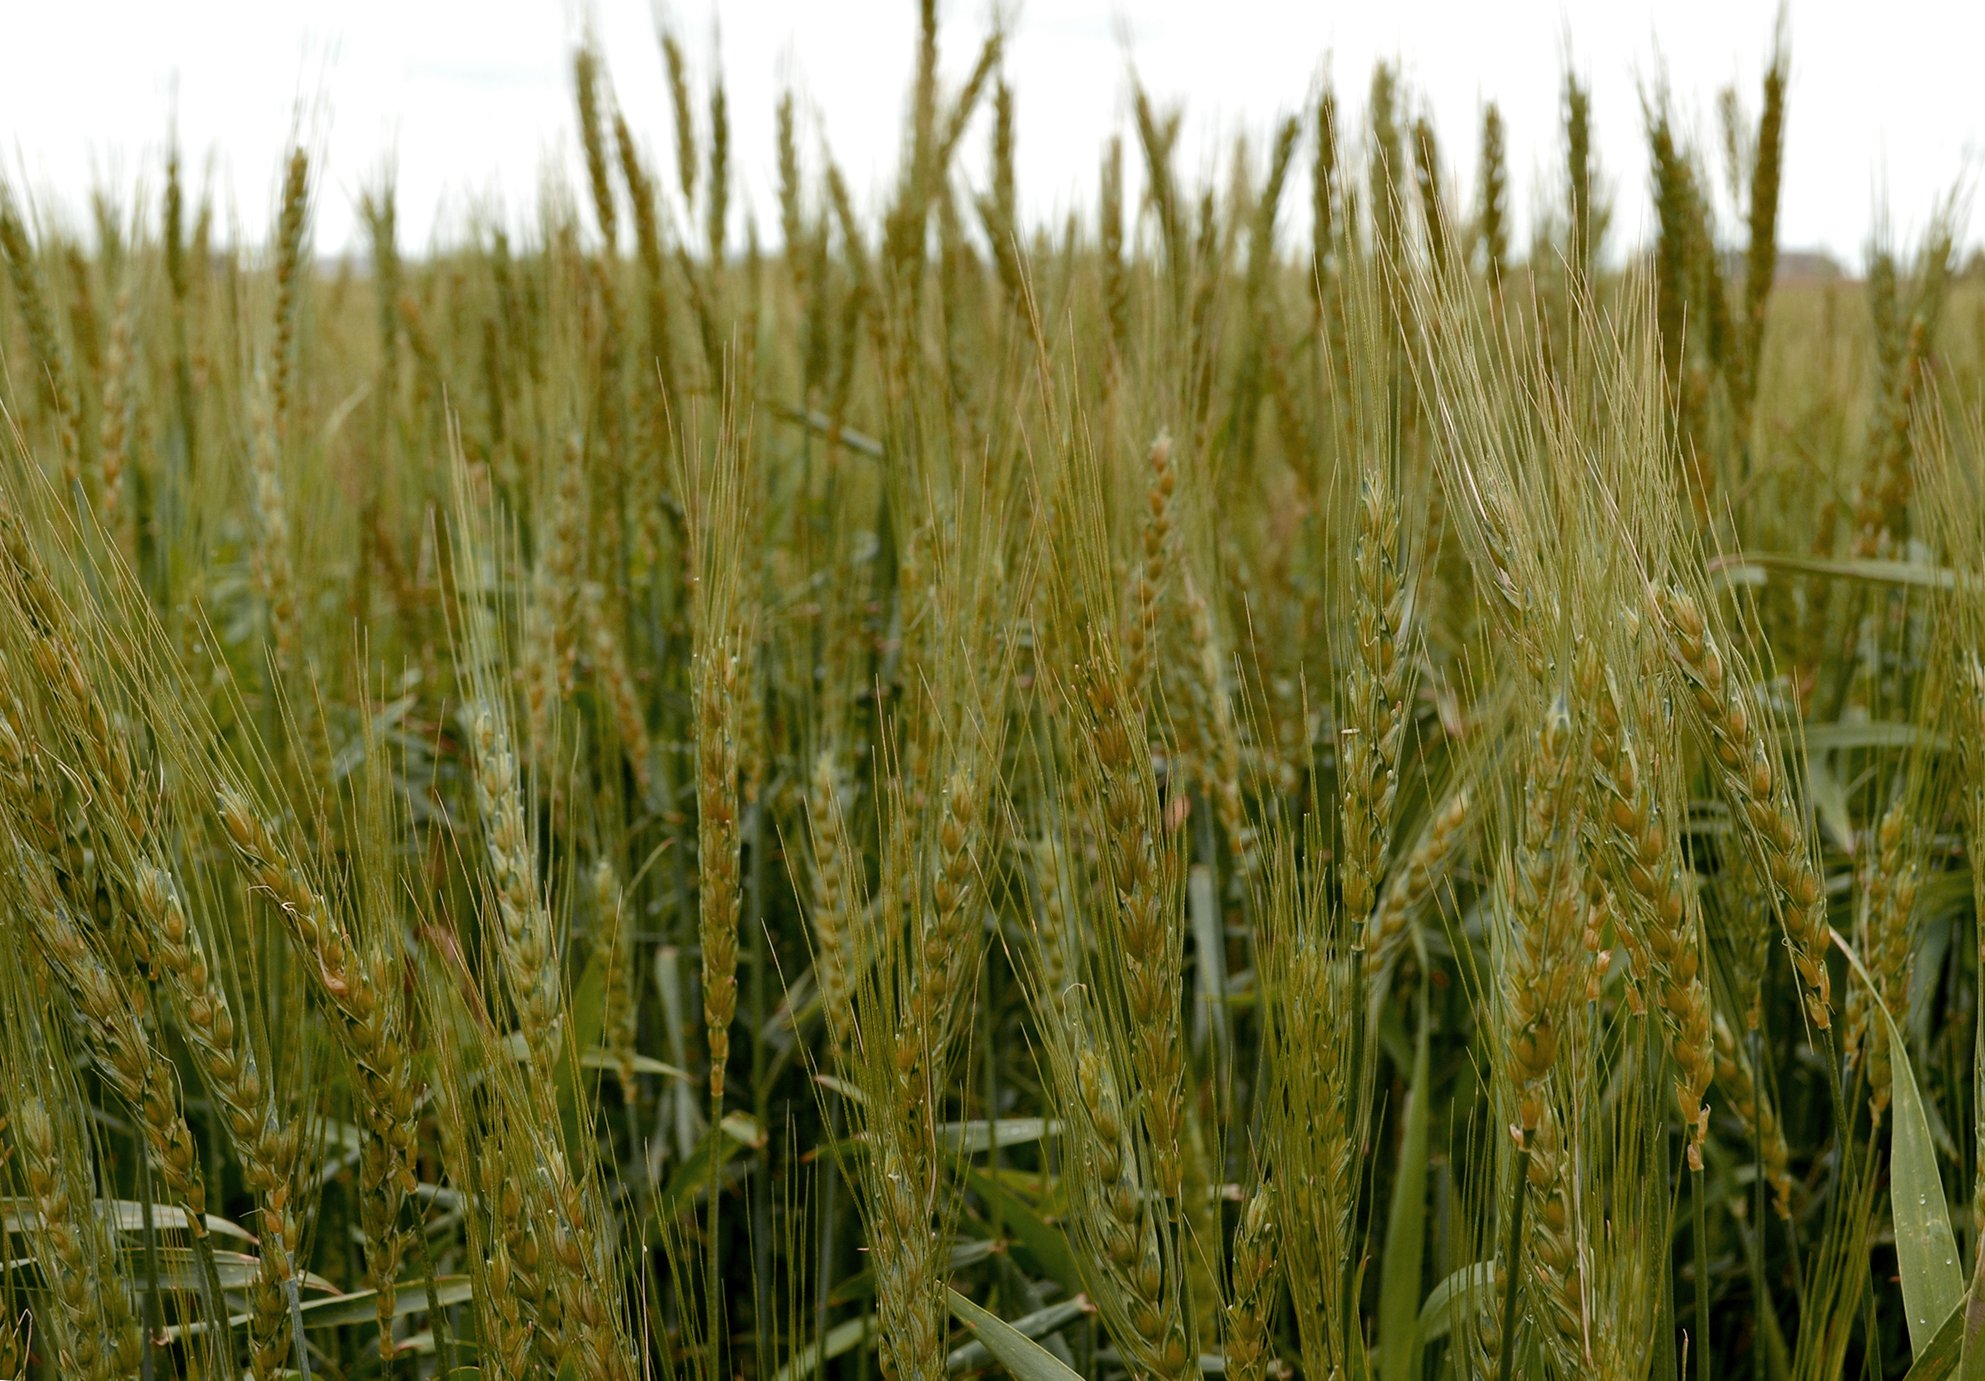 Wheat photos found on the web. 